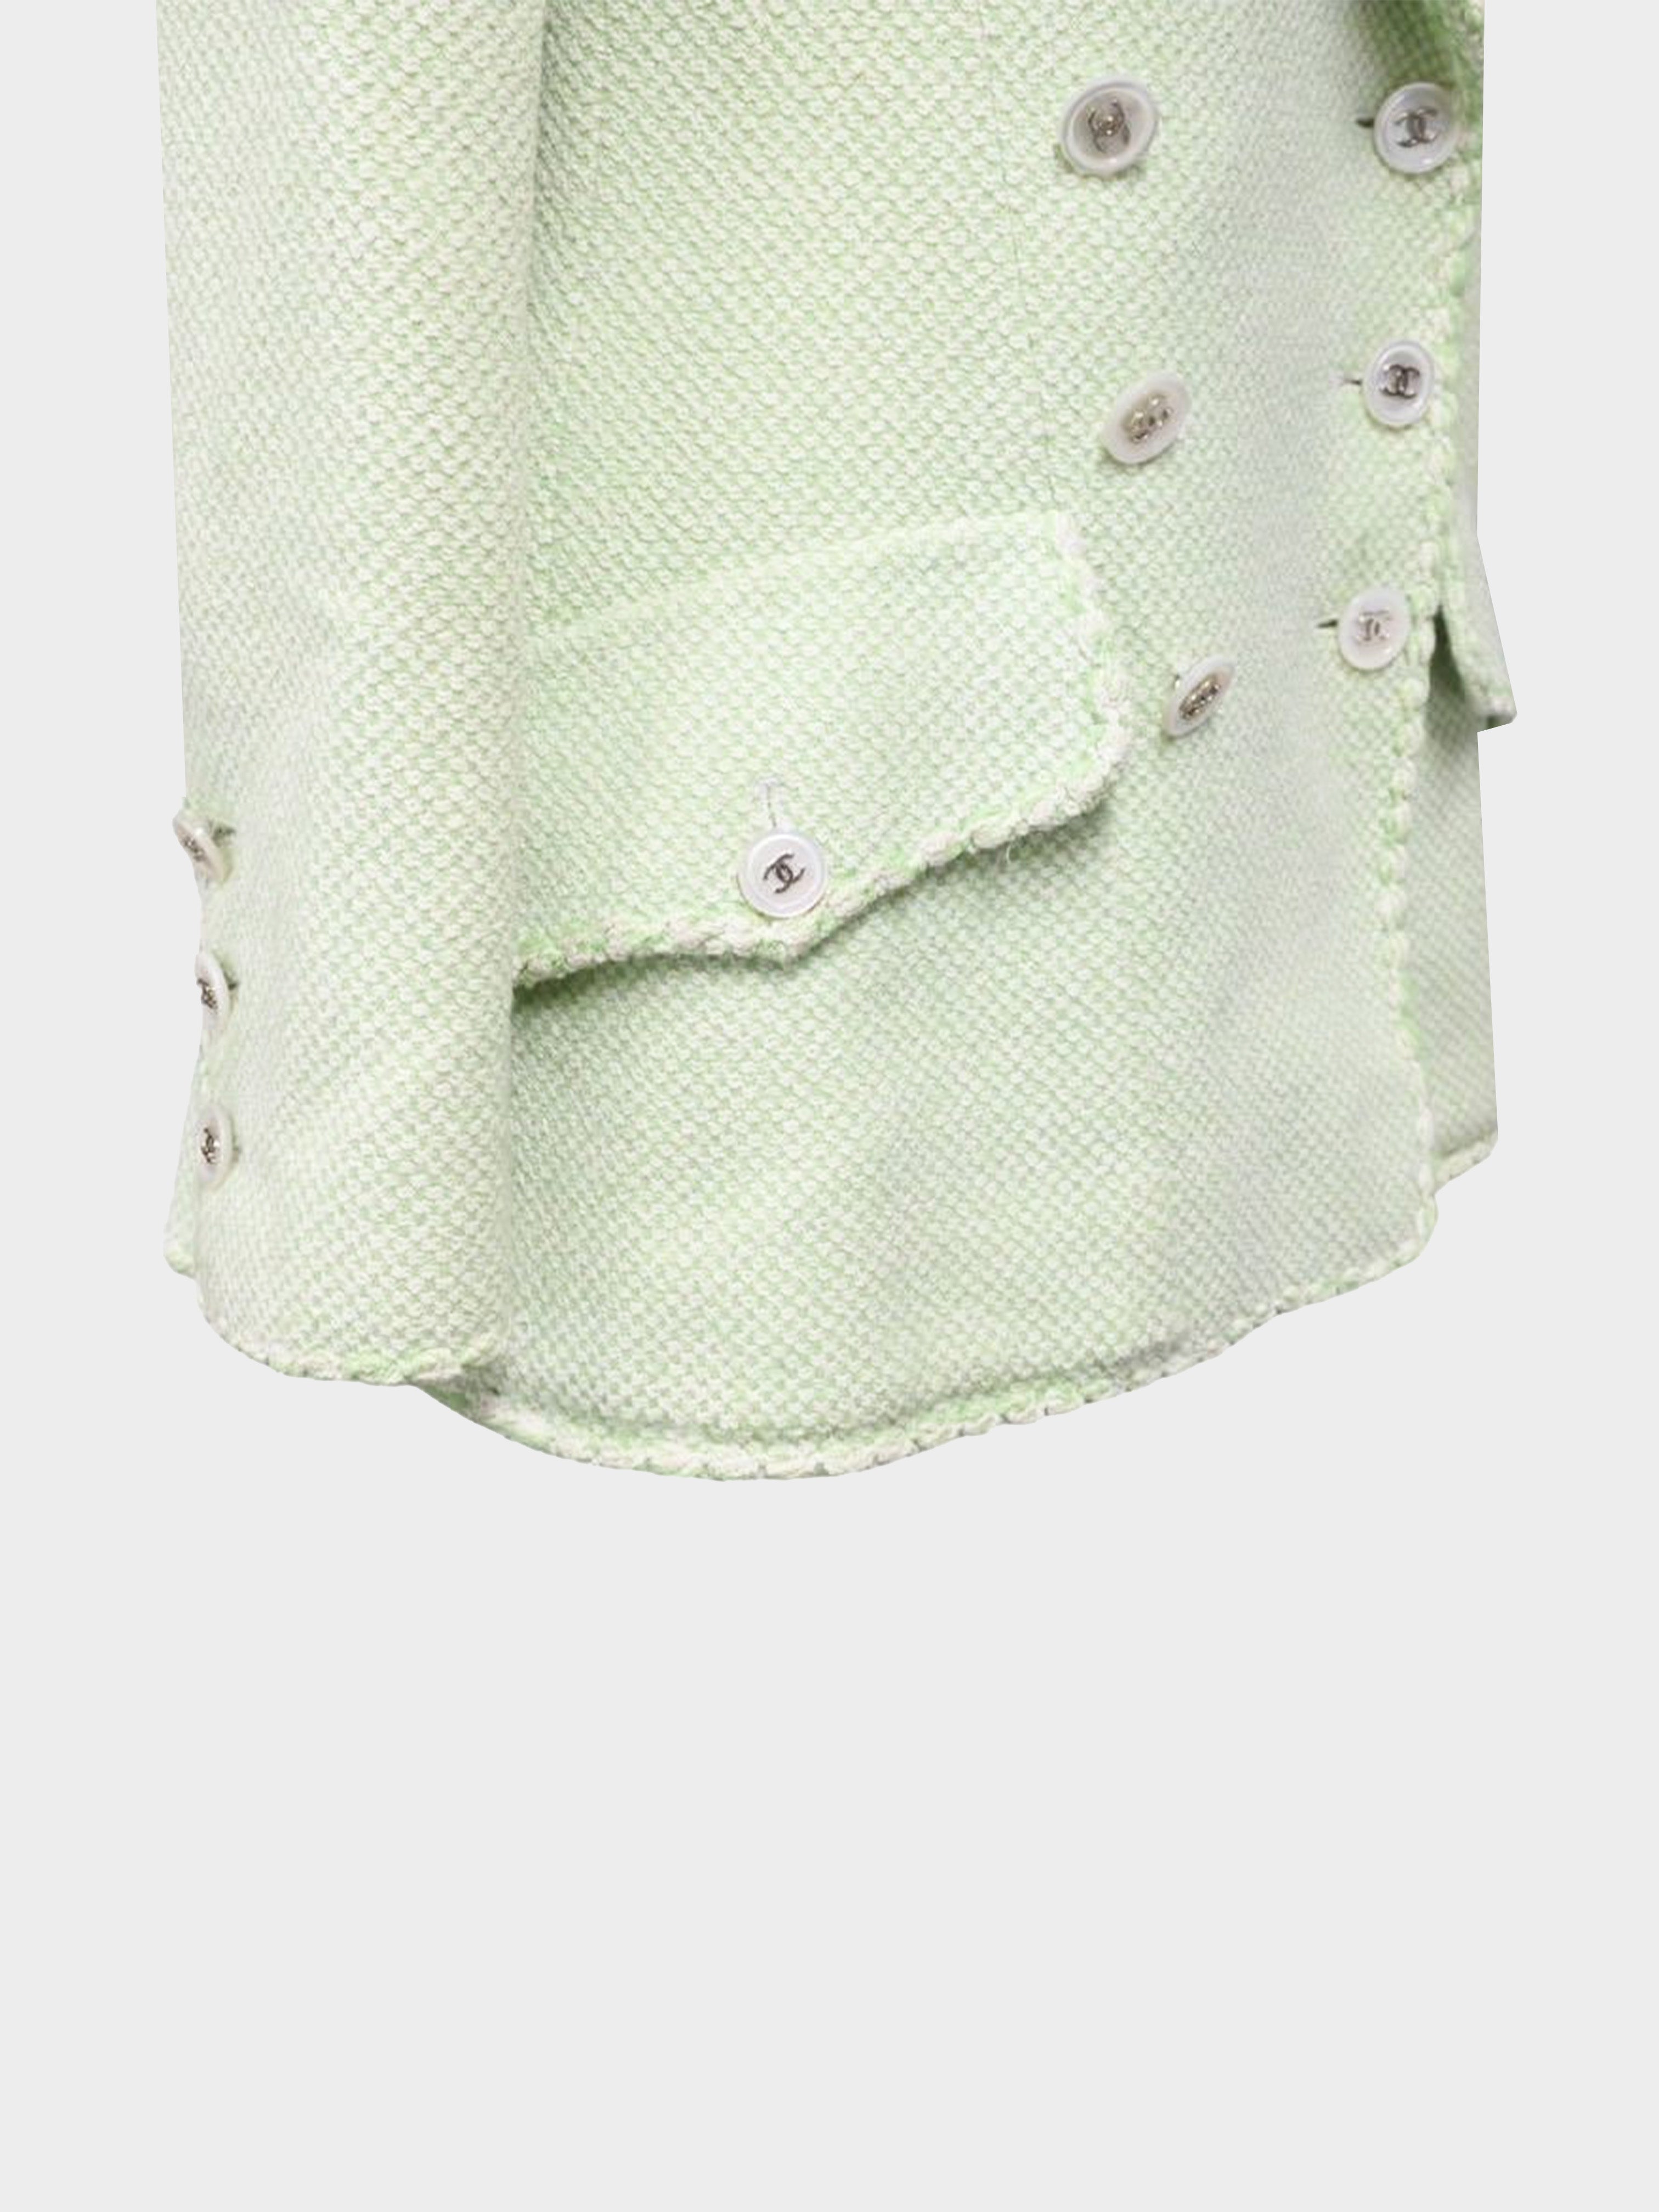 Chanel Spring 1997 Mint Green Tweed Blazer · INTO